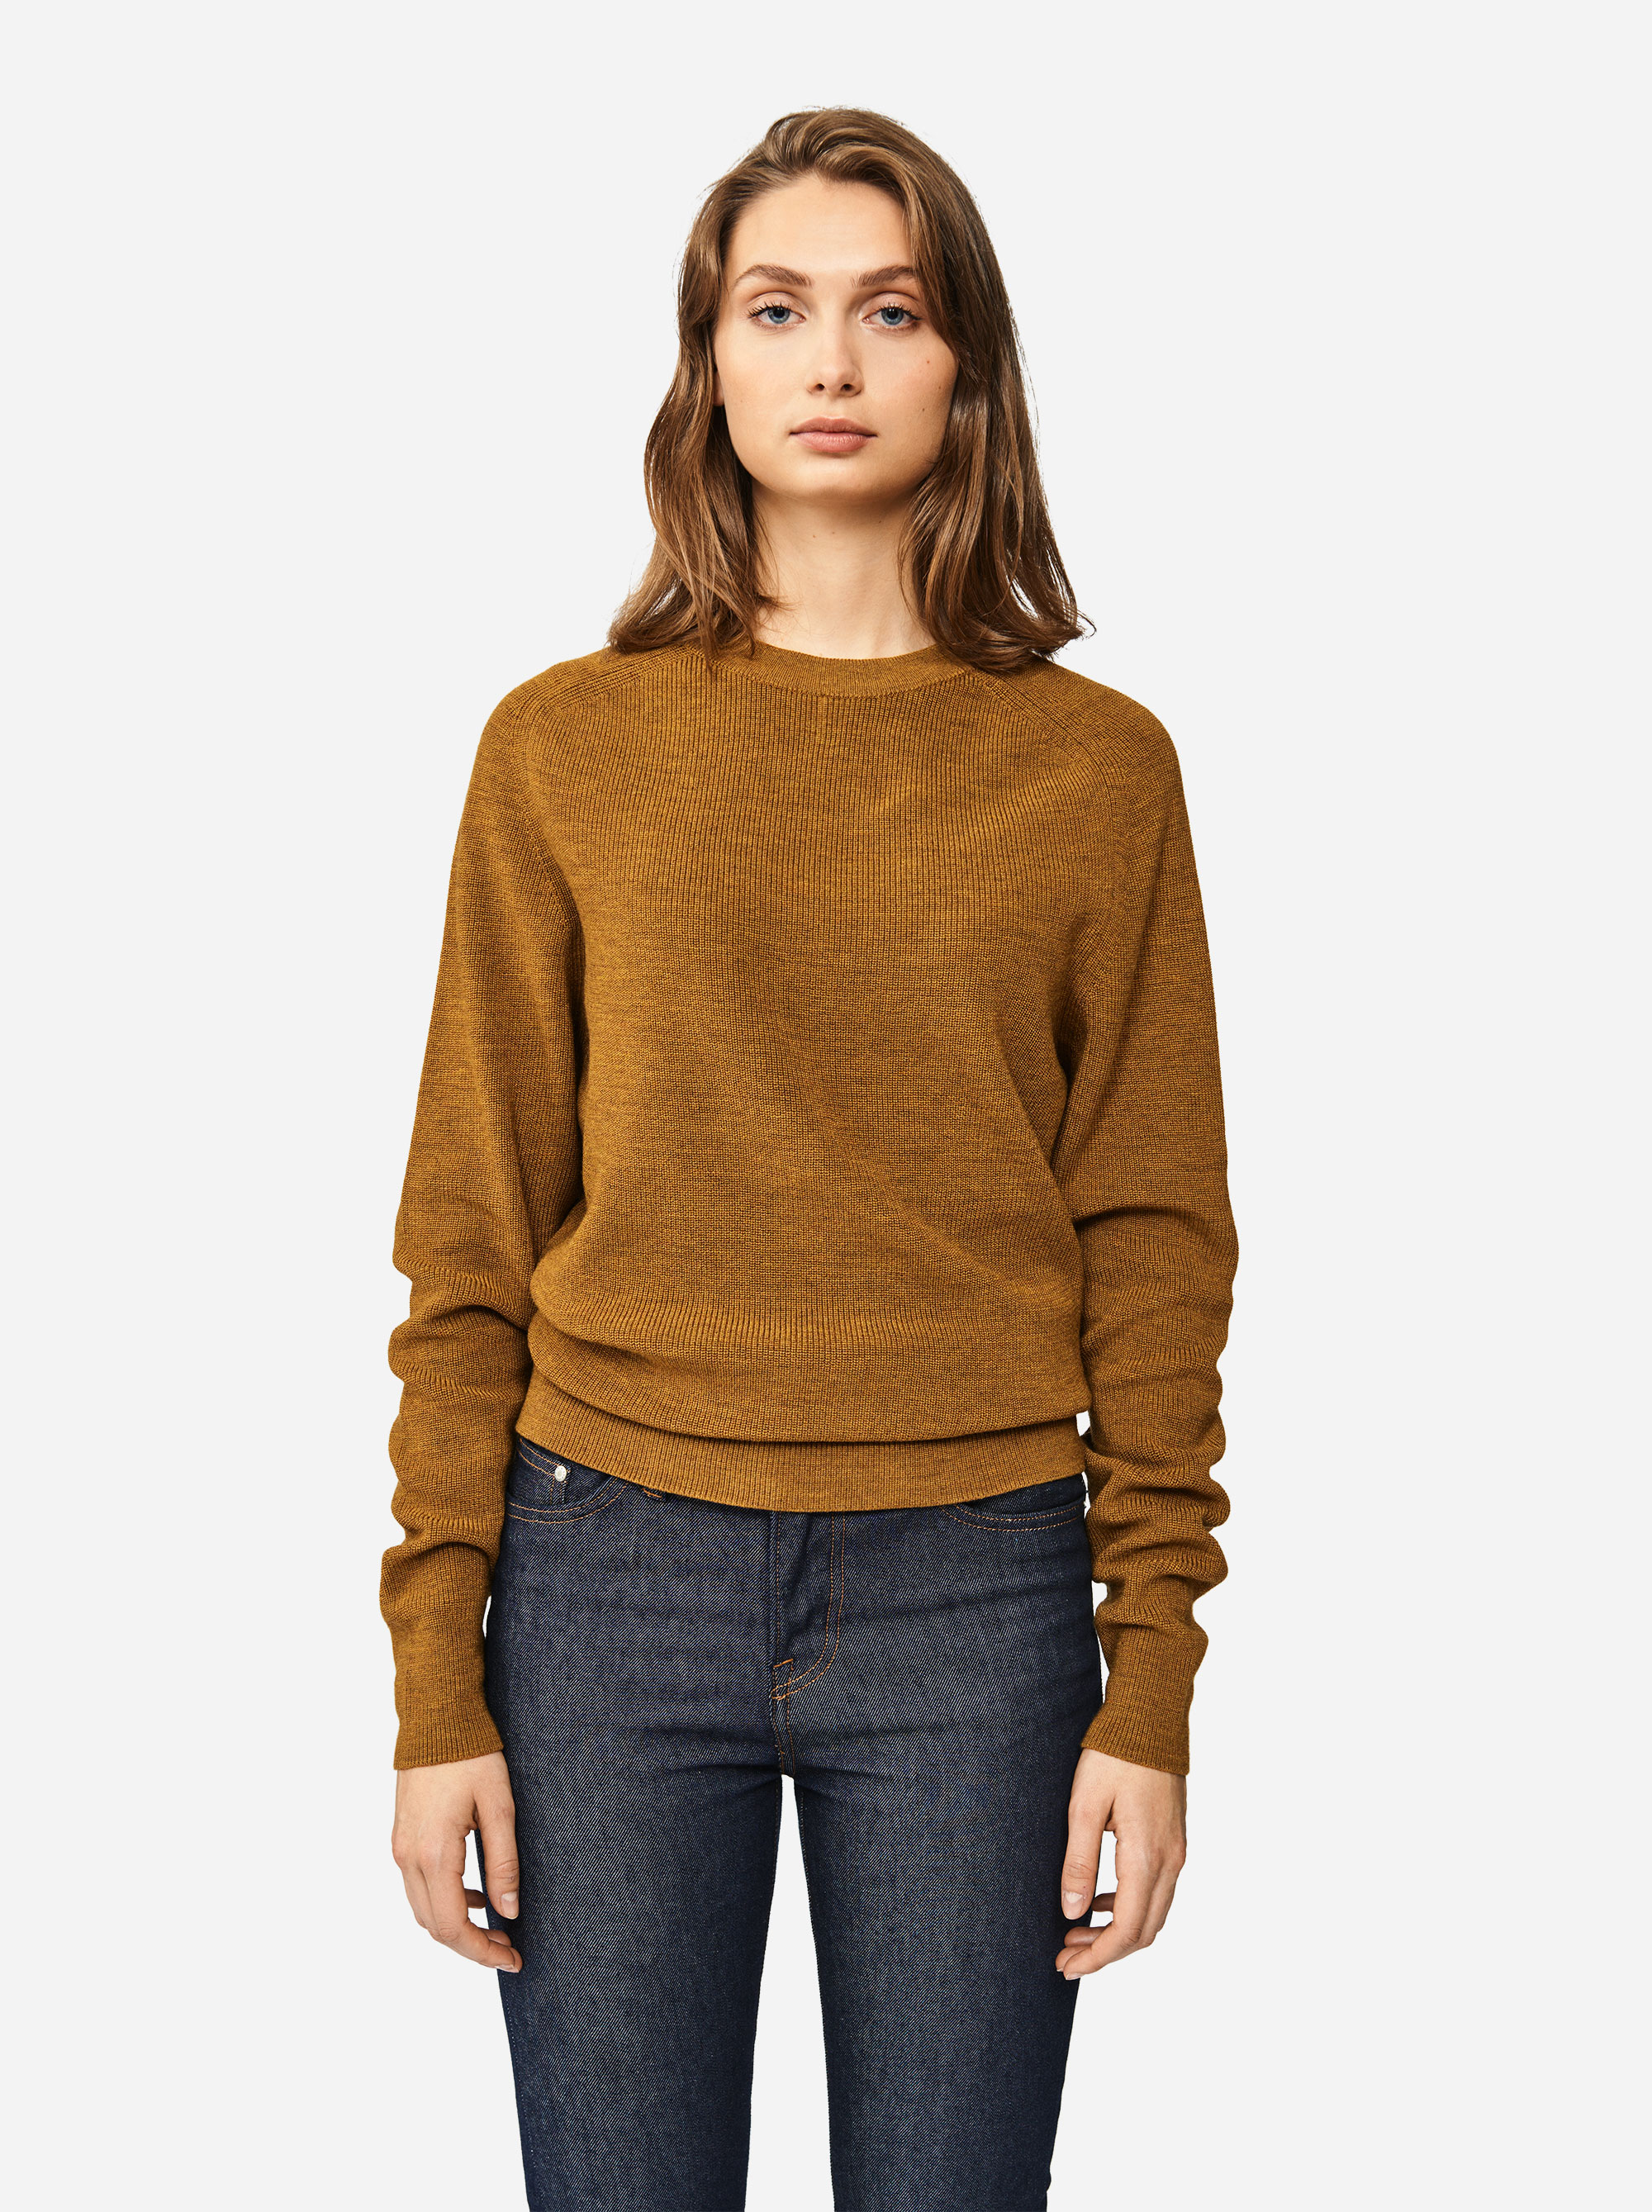 Teym - Crewneck - The Merino Sweater - Women - Mustard - 3